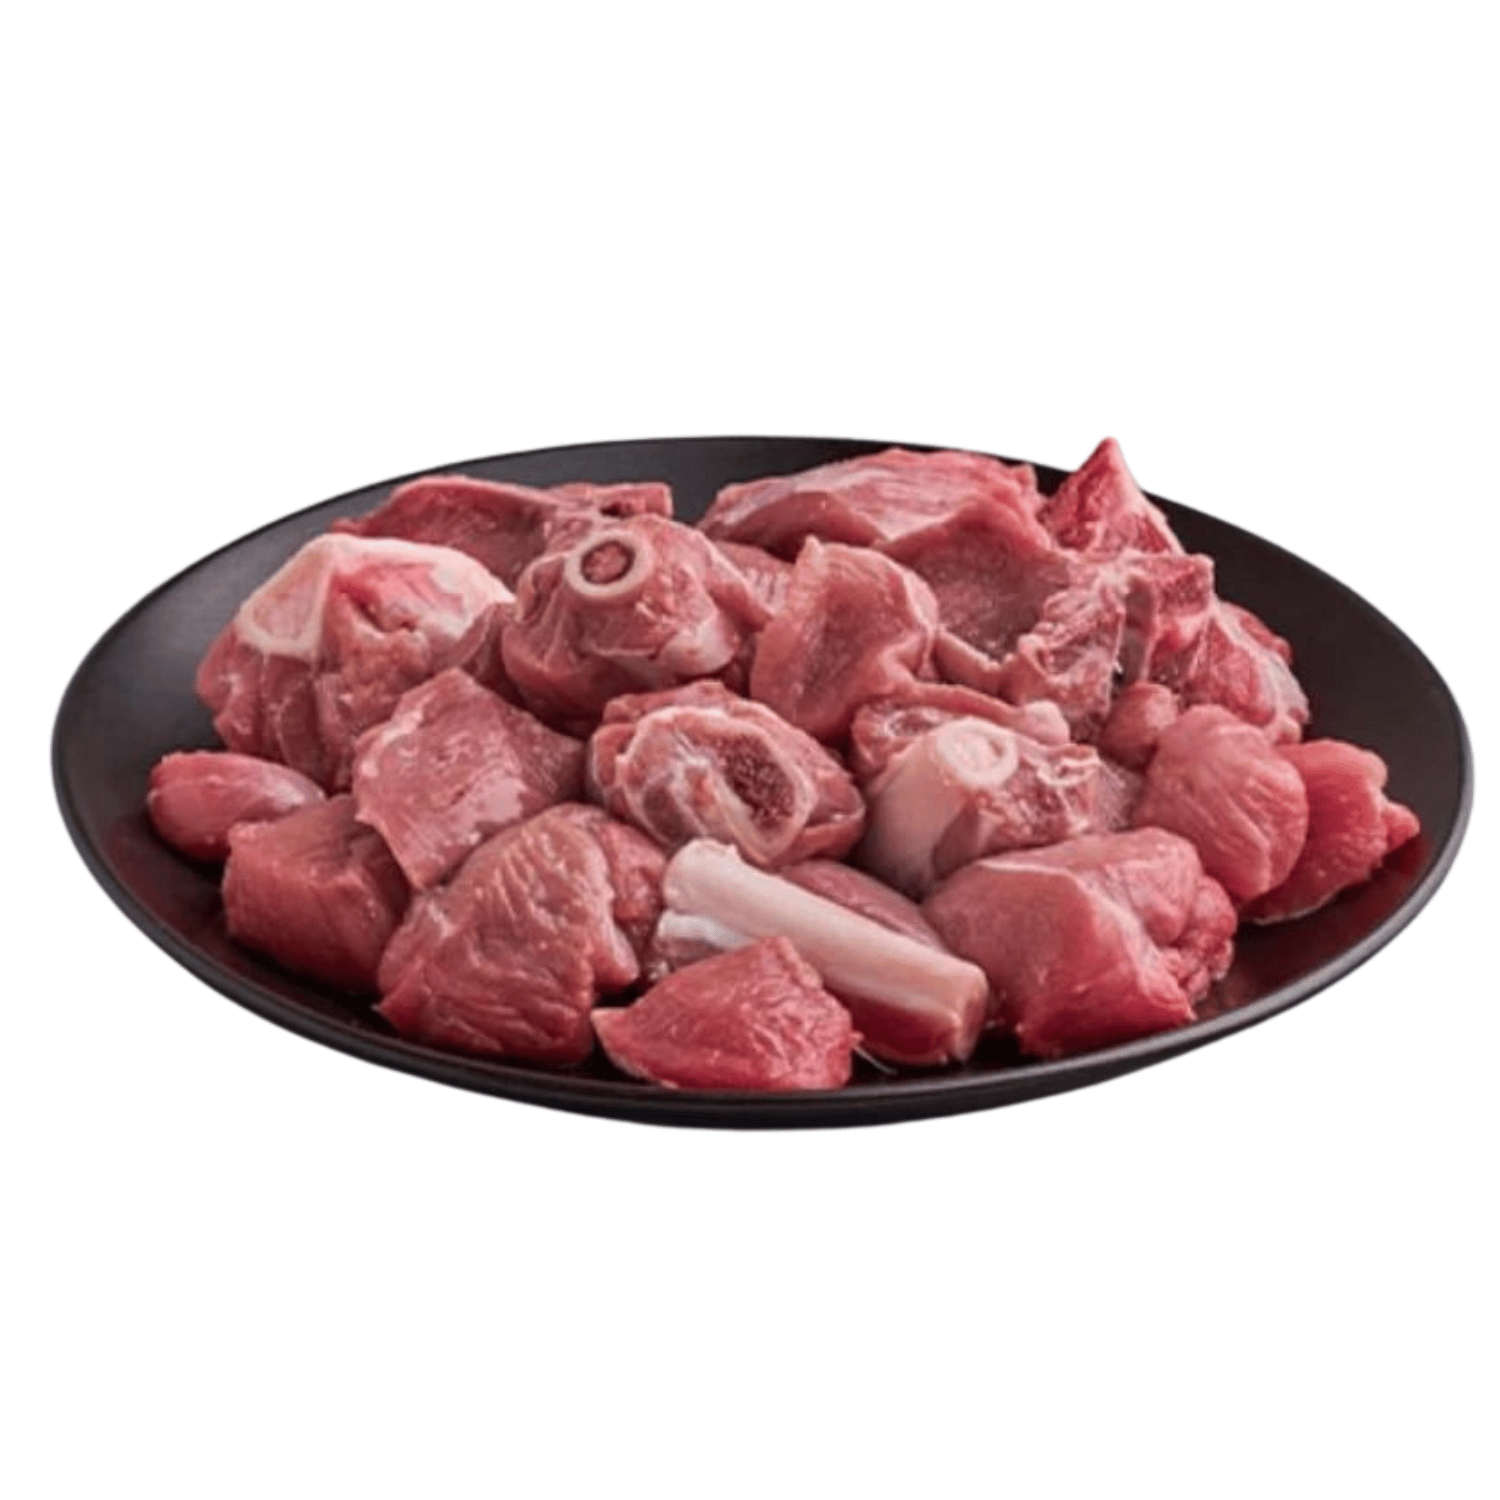 Mutton Curry Cut (Rewaji) - Large Pieces